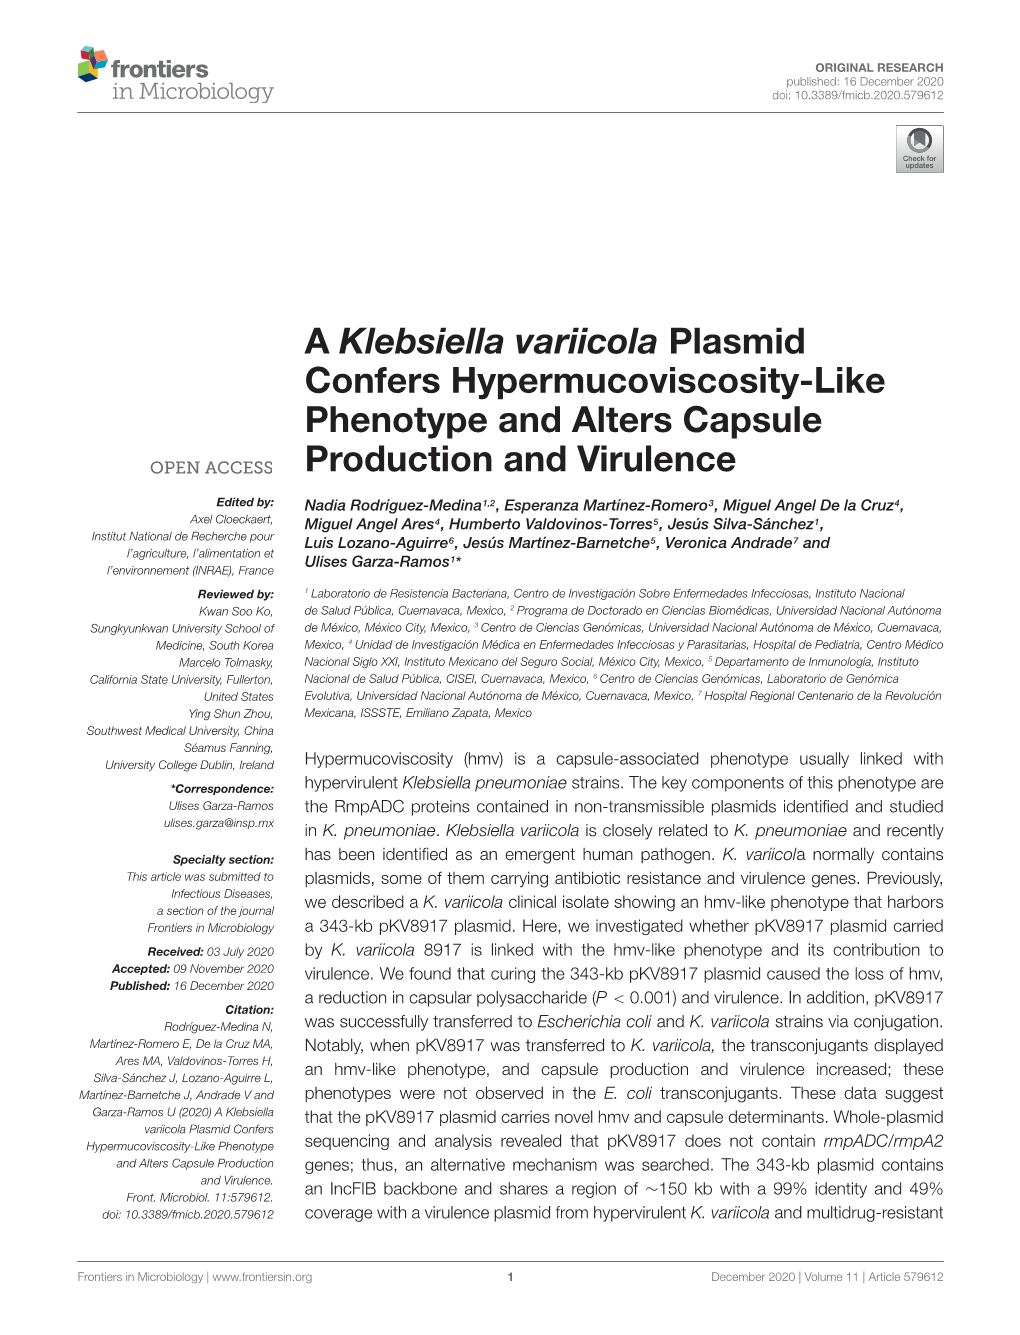 A Klebsiella Variicola Plasmid Confers Hypermucoviscosity-Like Phenotype and Alters Capsule Production and Virulence